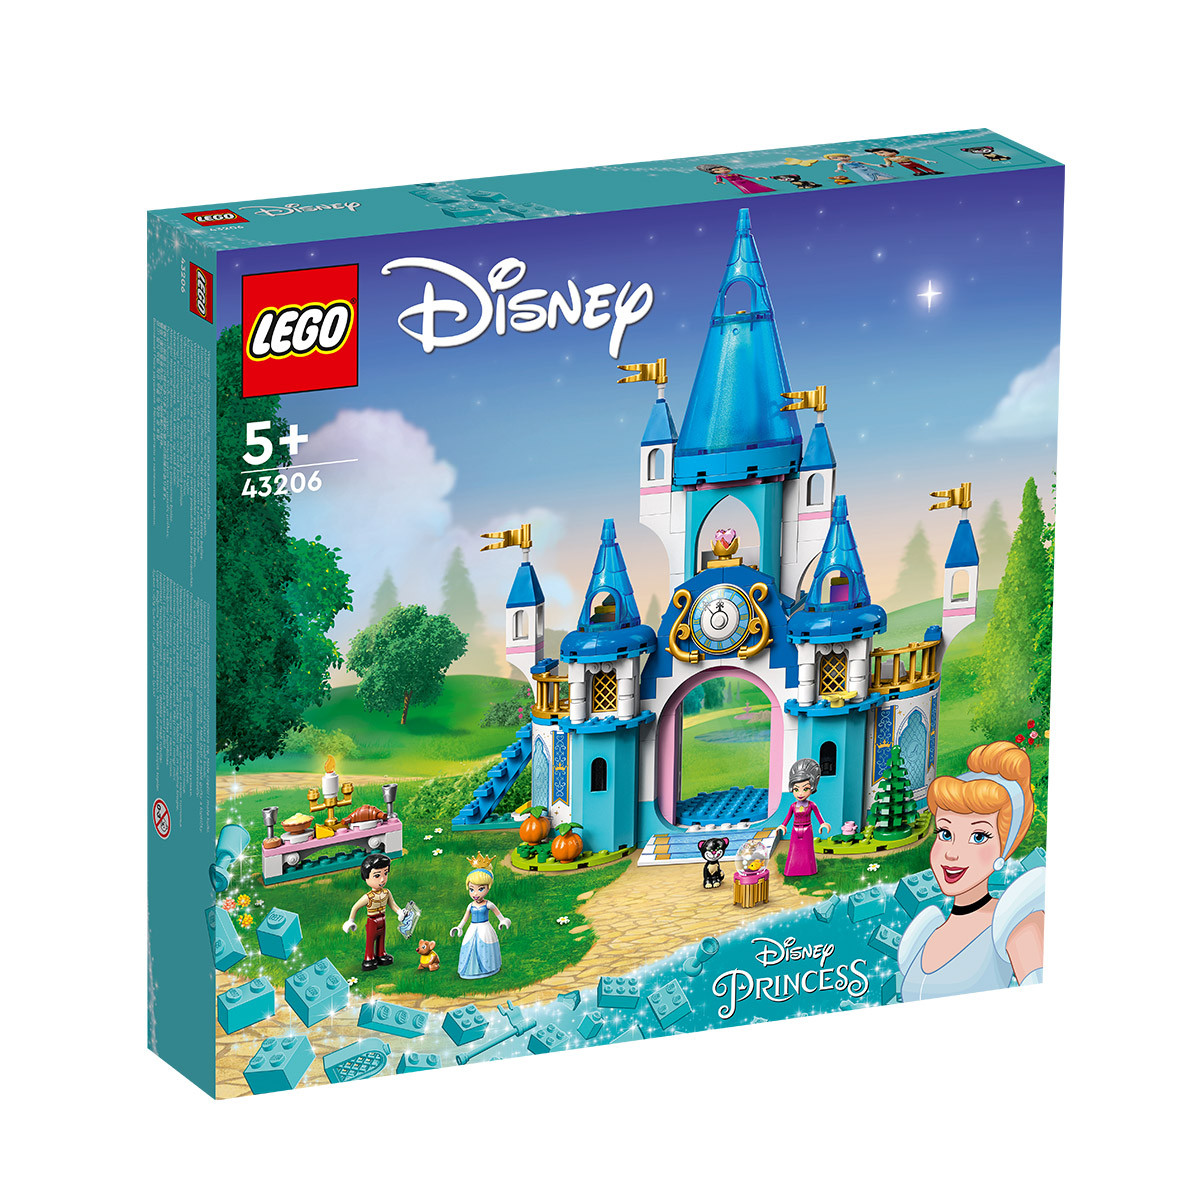 88VIP：LEGO 乐高 Disney Princess迪士尼公主系列 43206 仙蒂瑞拉和王子的城堡 346.05